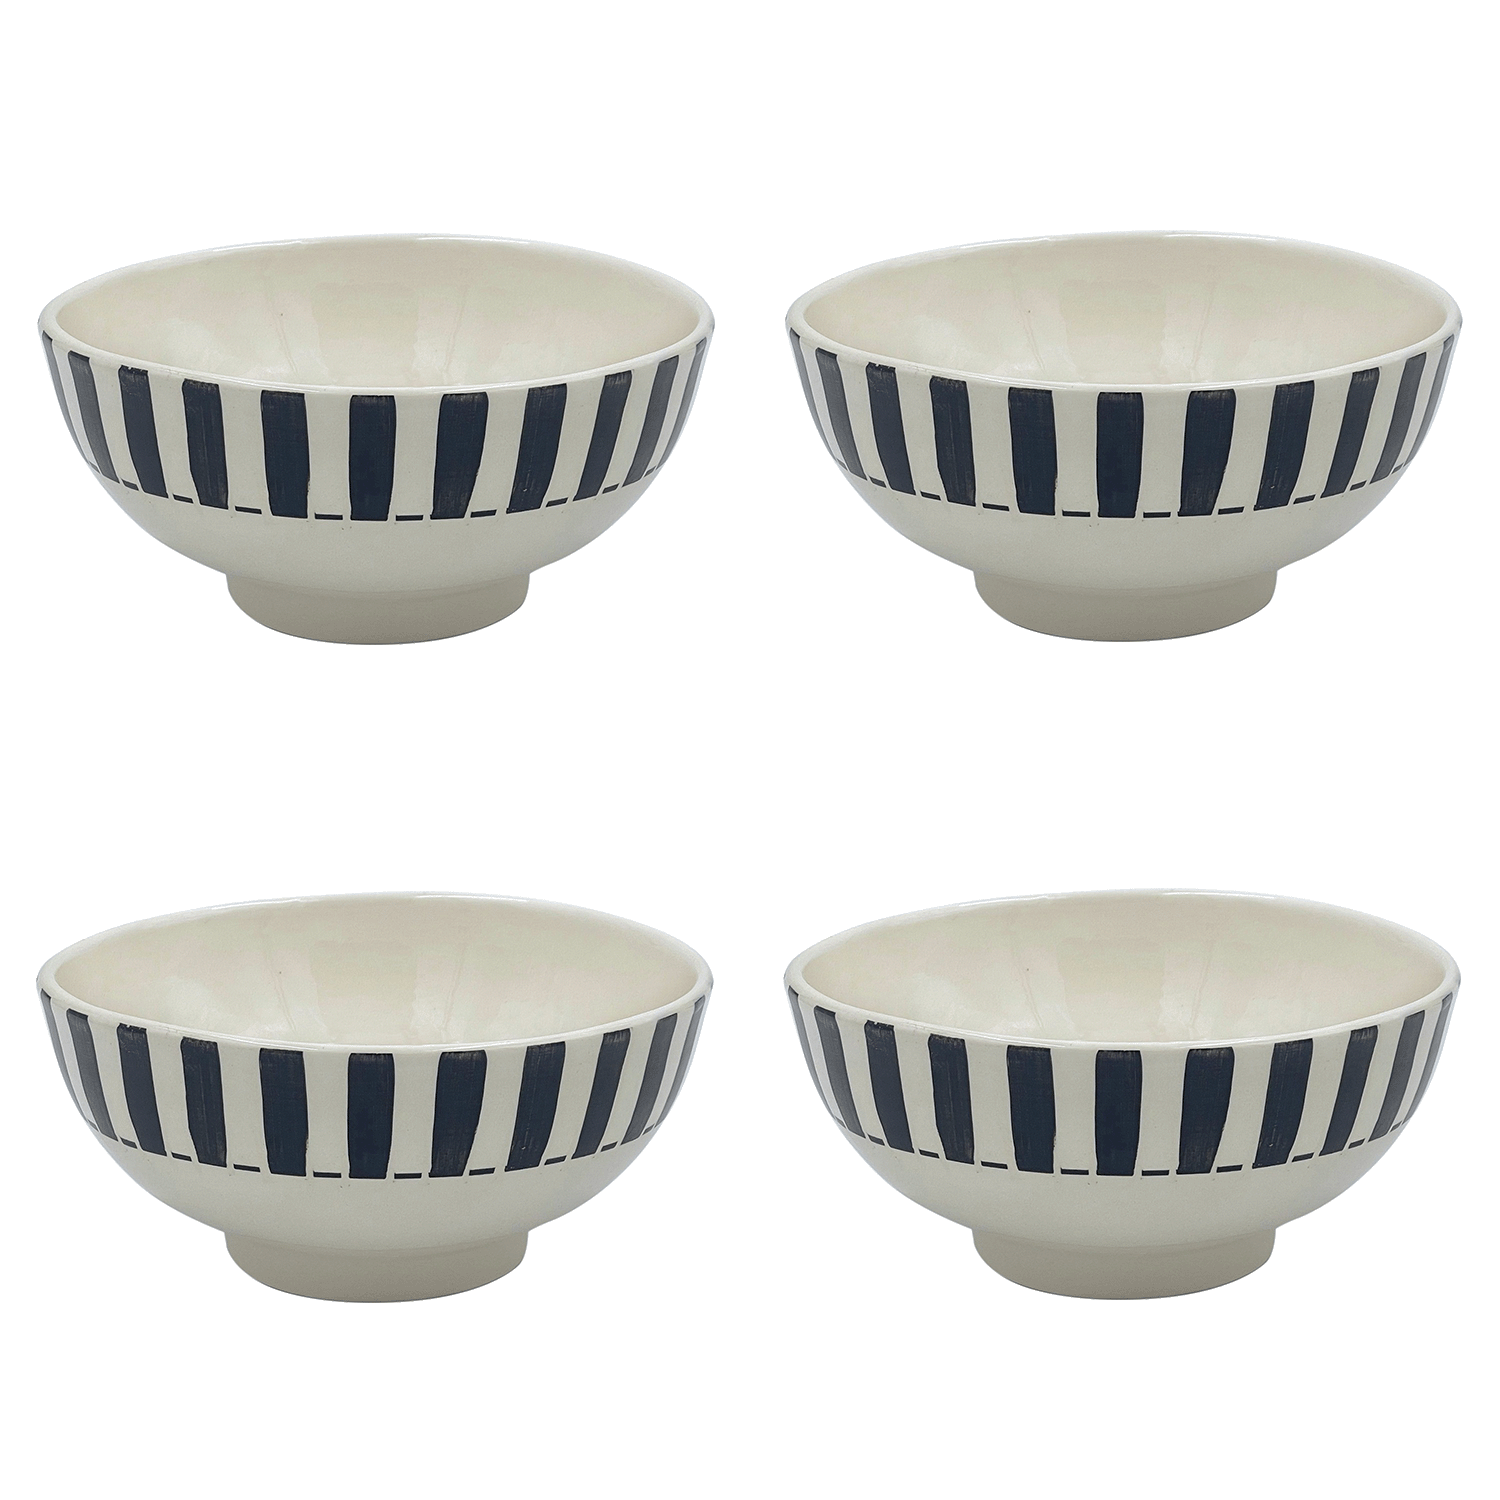 Medium Black Stripes Bowls (Set of 4)